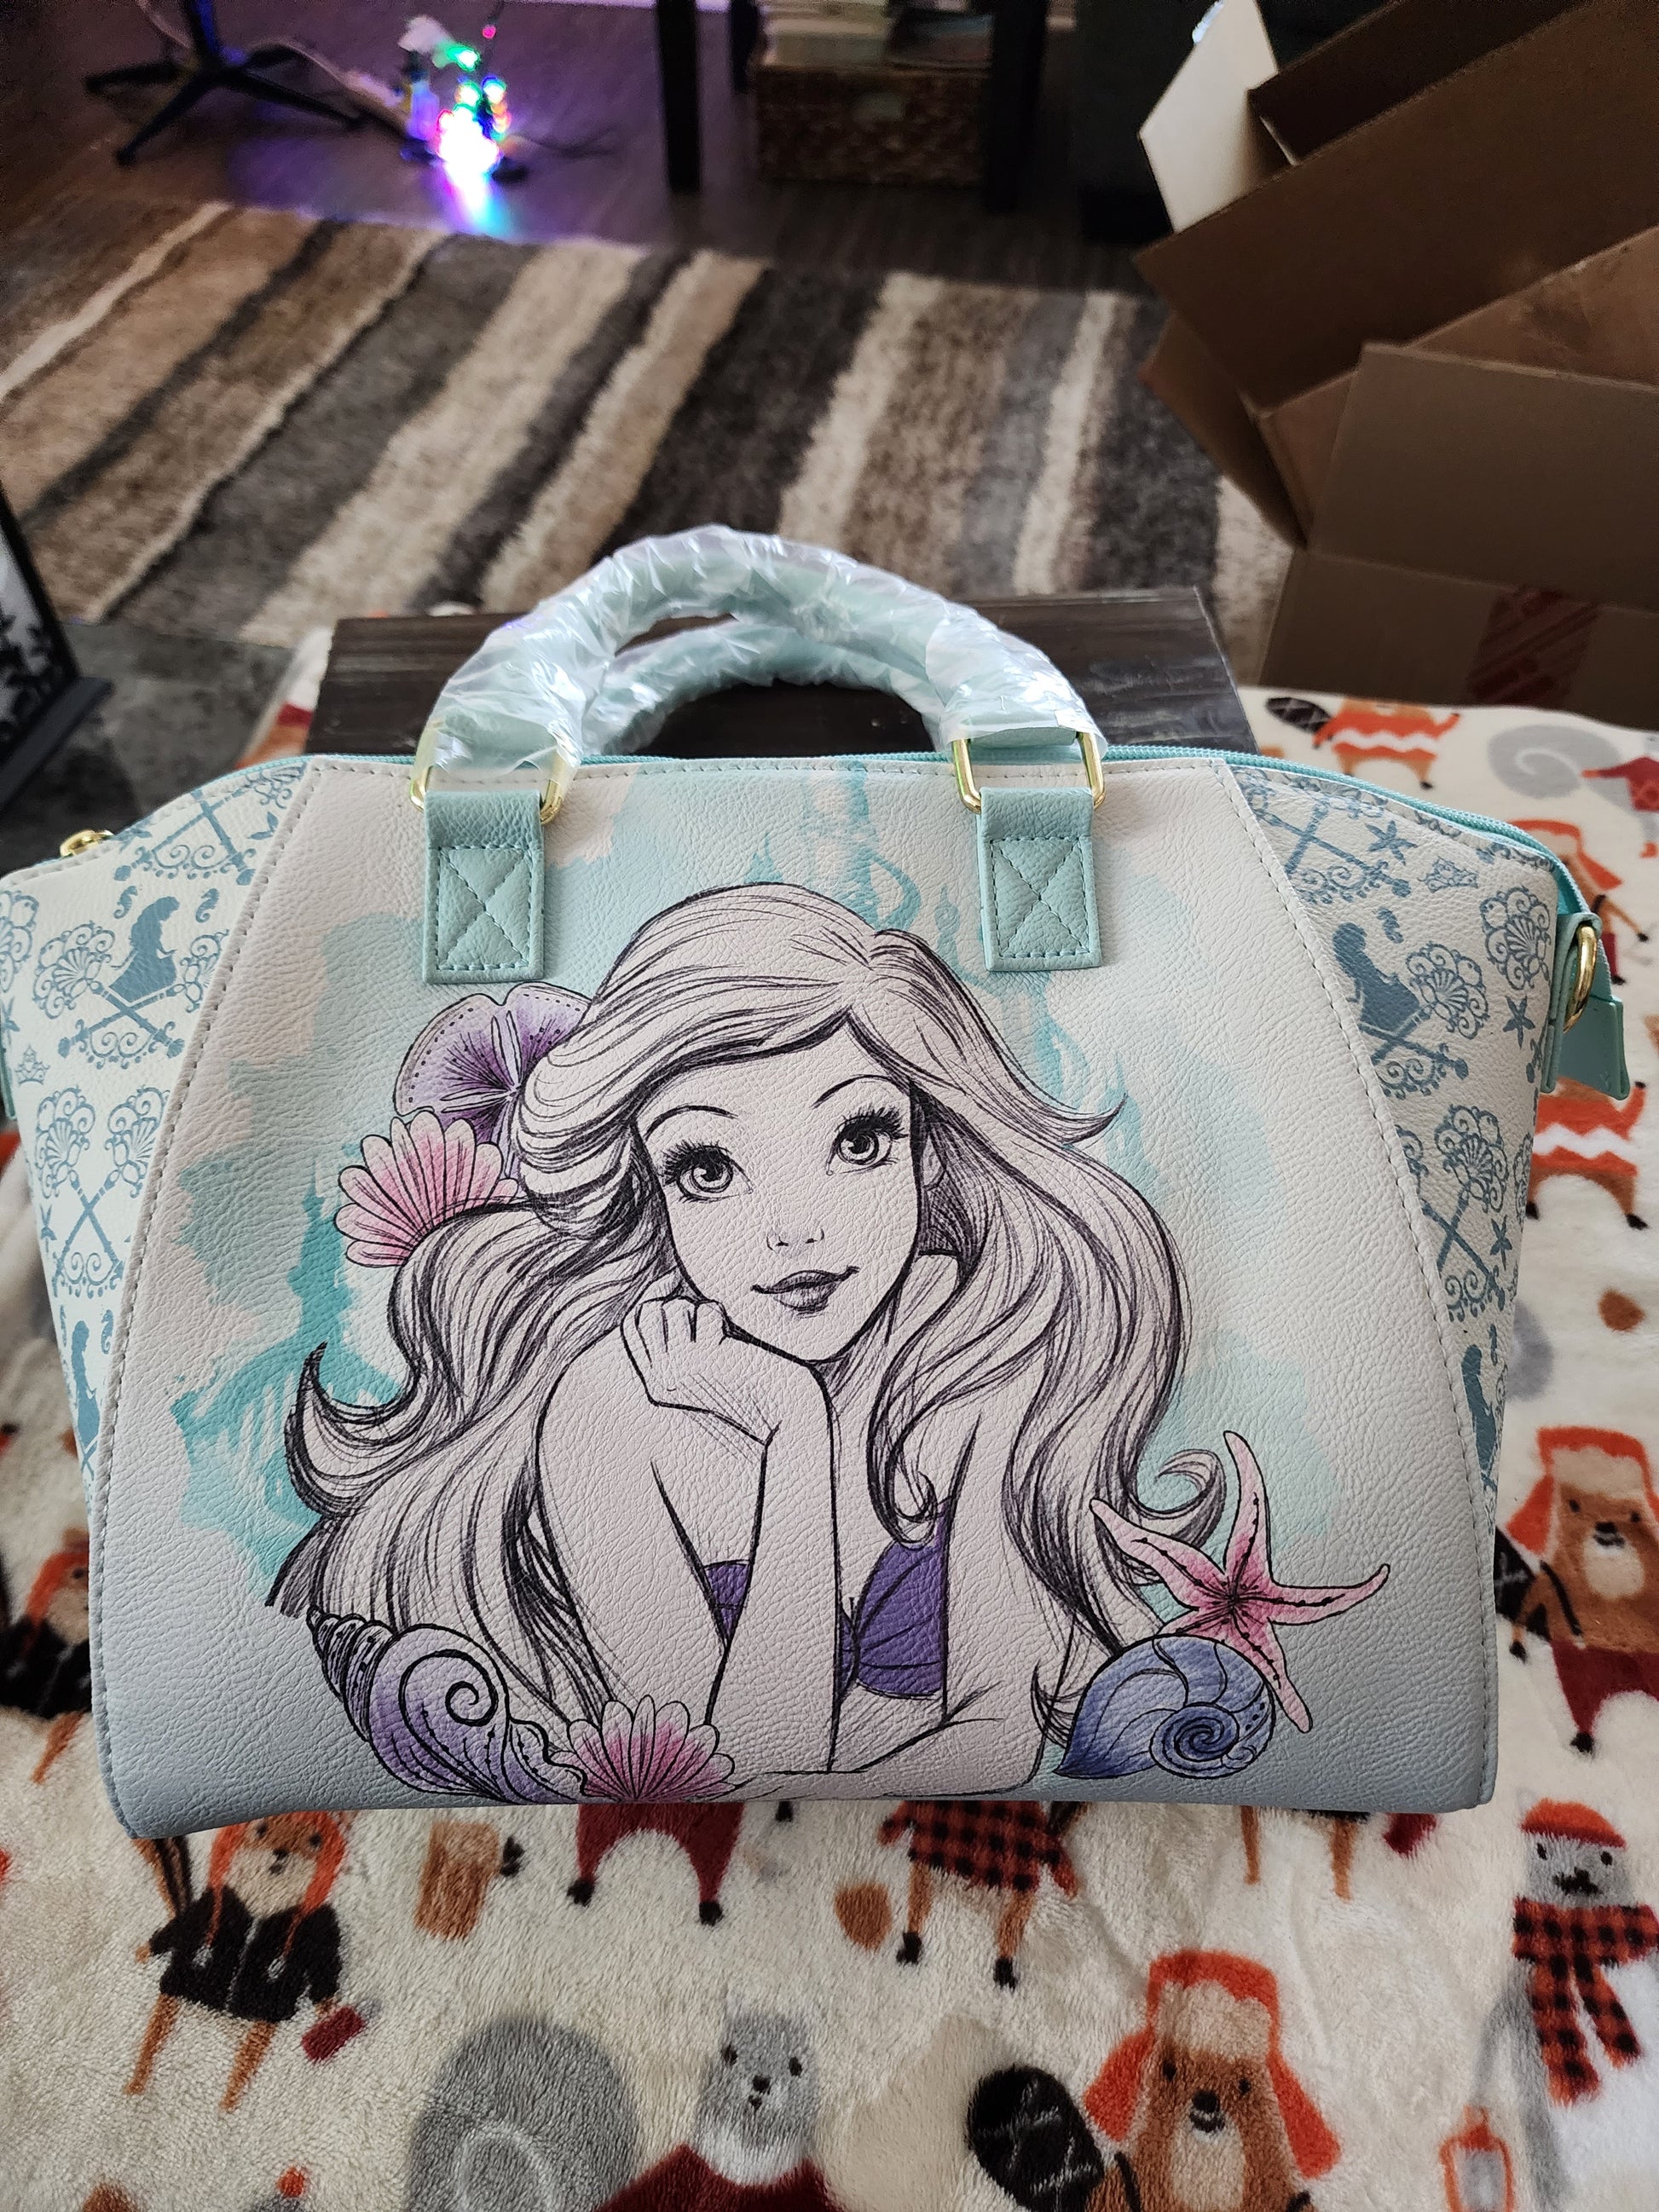 Loungefly Little Mermaid Handbag/Backpack – Gwen's Mermaid Cove